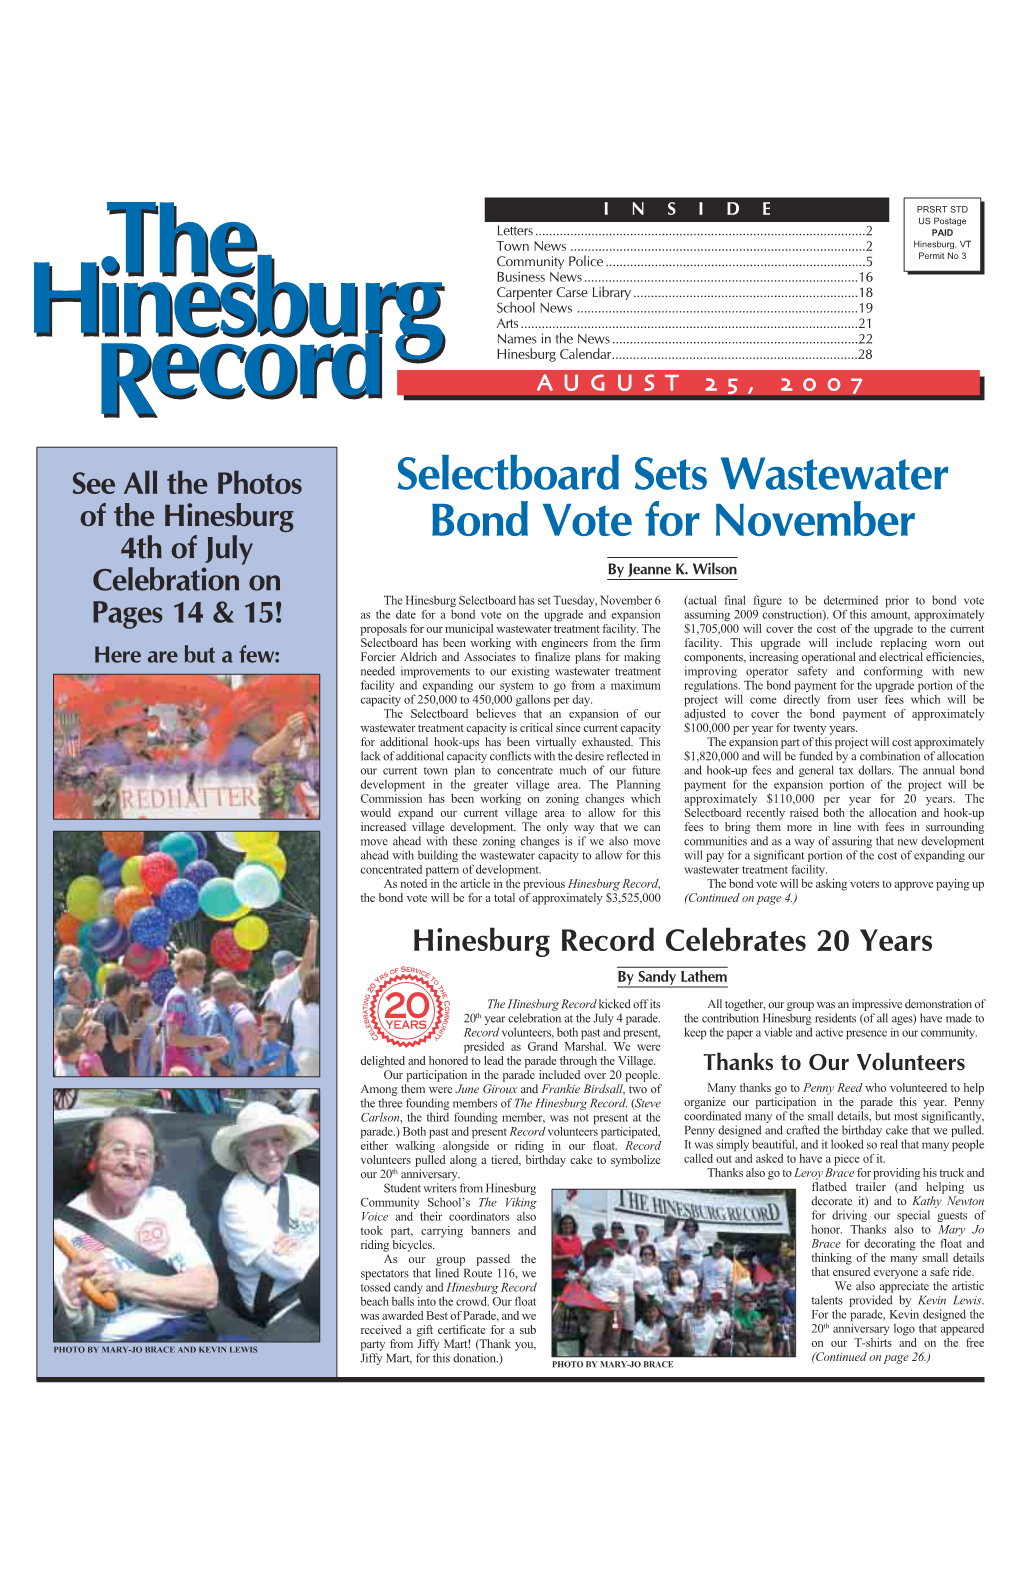 Selectboard Sets Wastewater Bond Vote for November